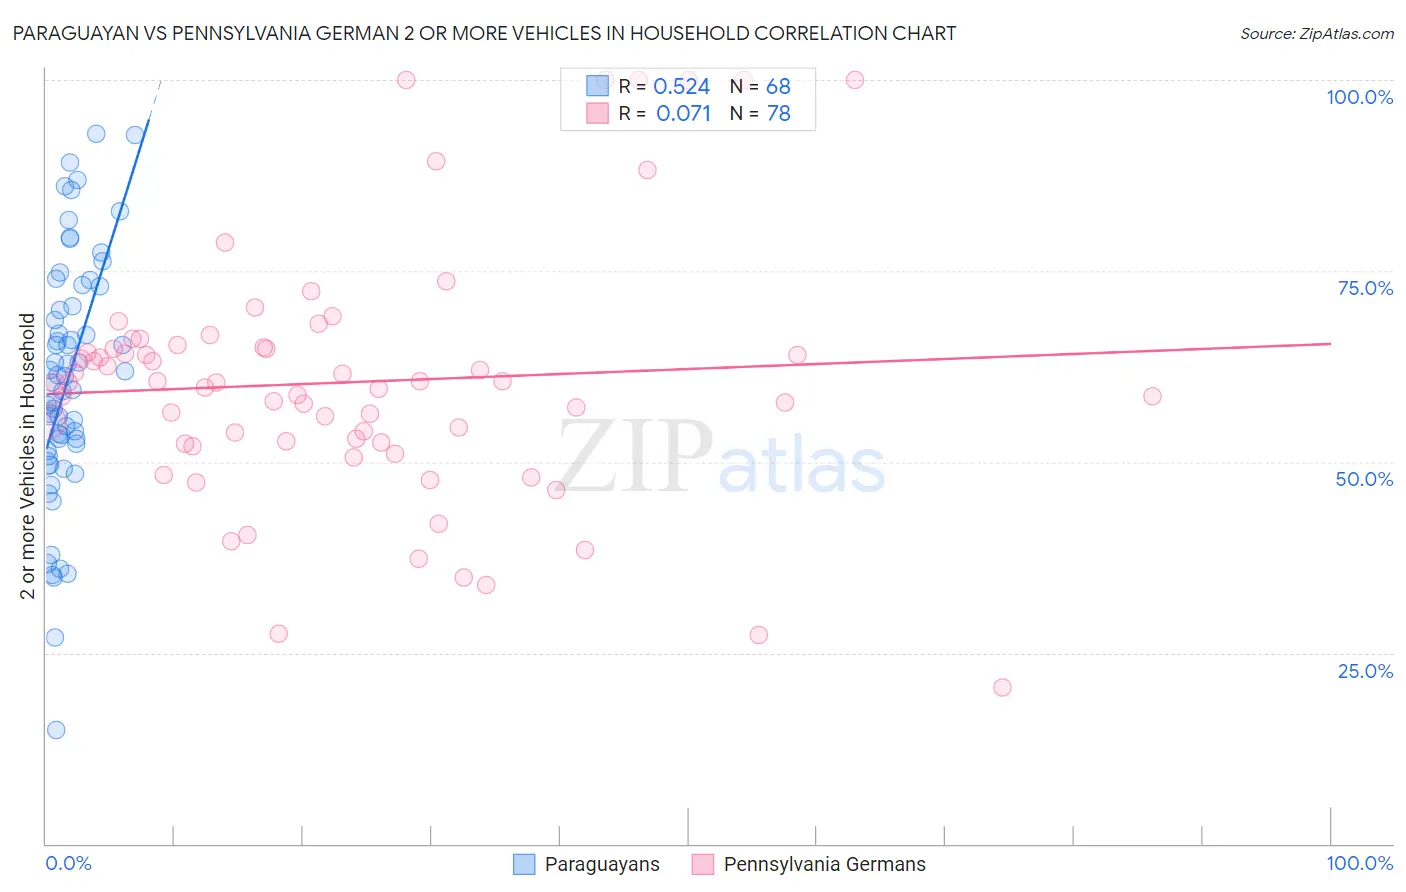 Paraguayan vs Pennsylvania German 2 or more Vehicles in Household